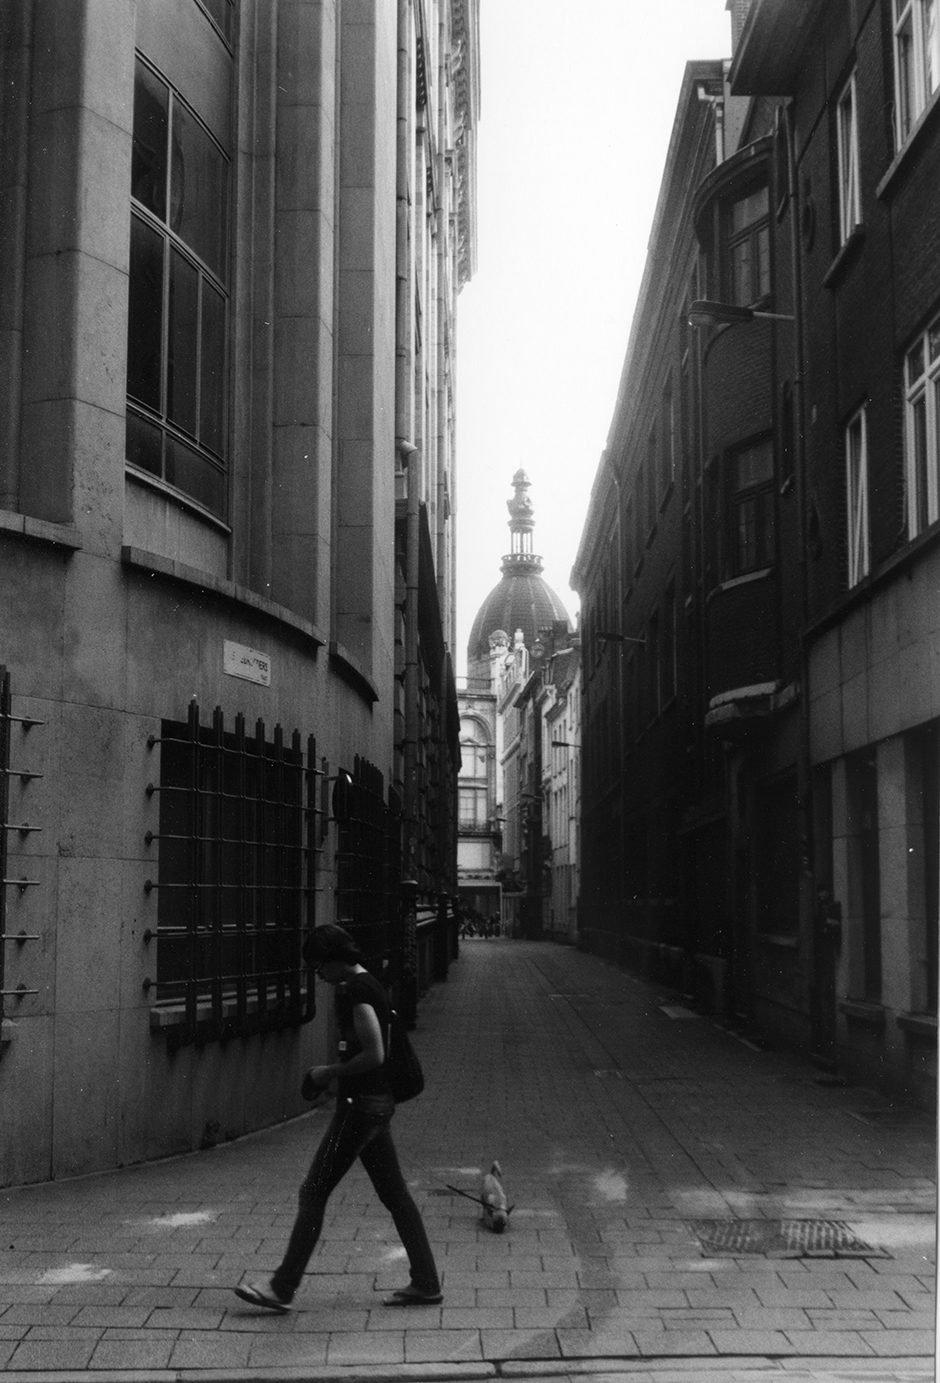 Lonesome day in Antwerpen